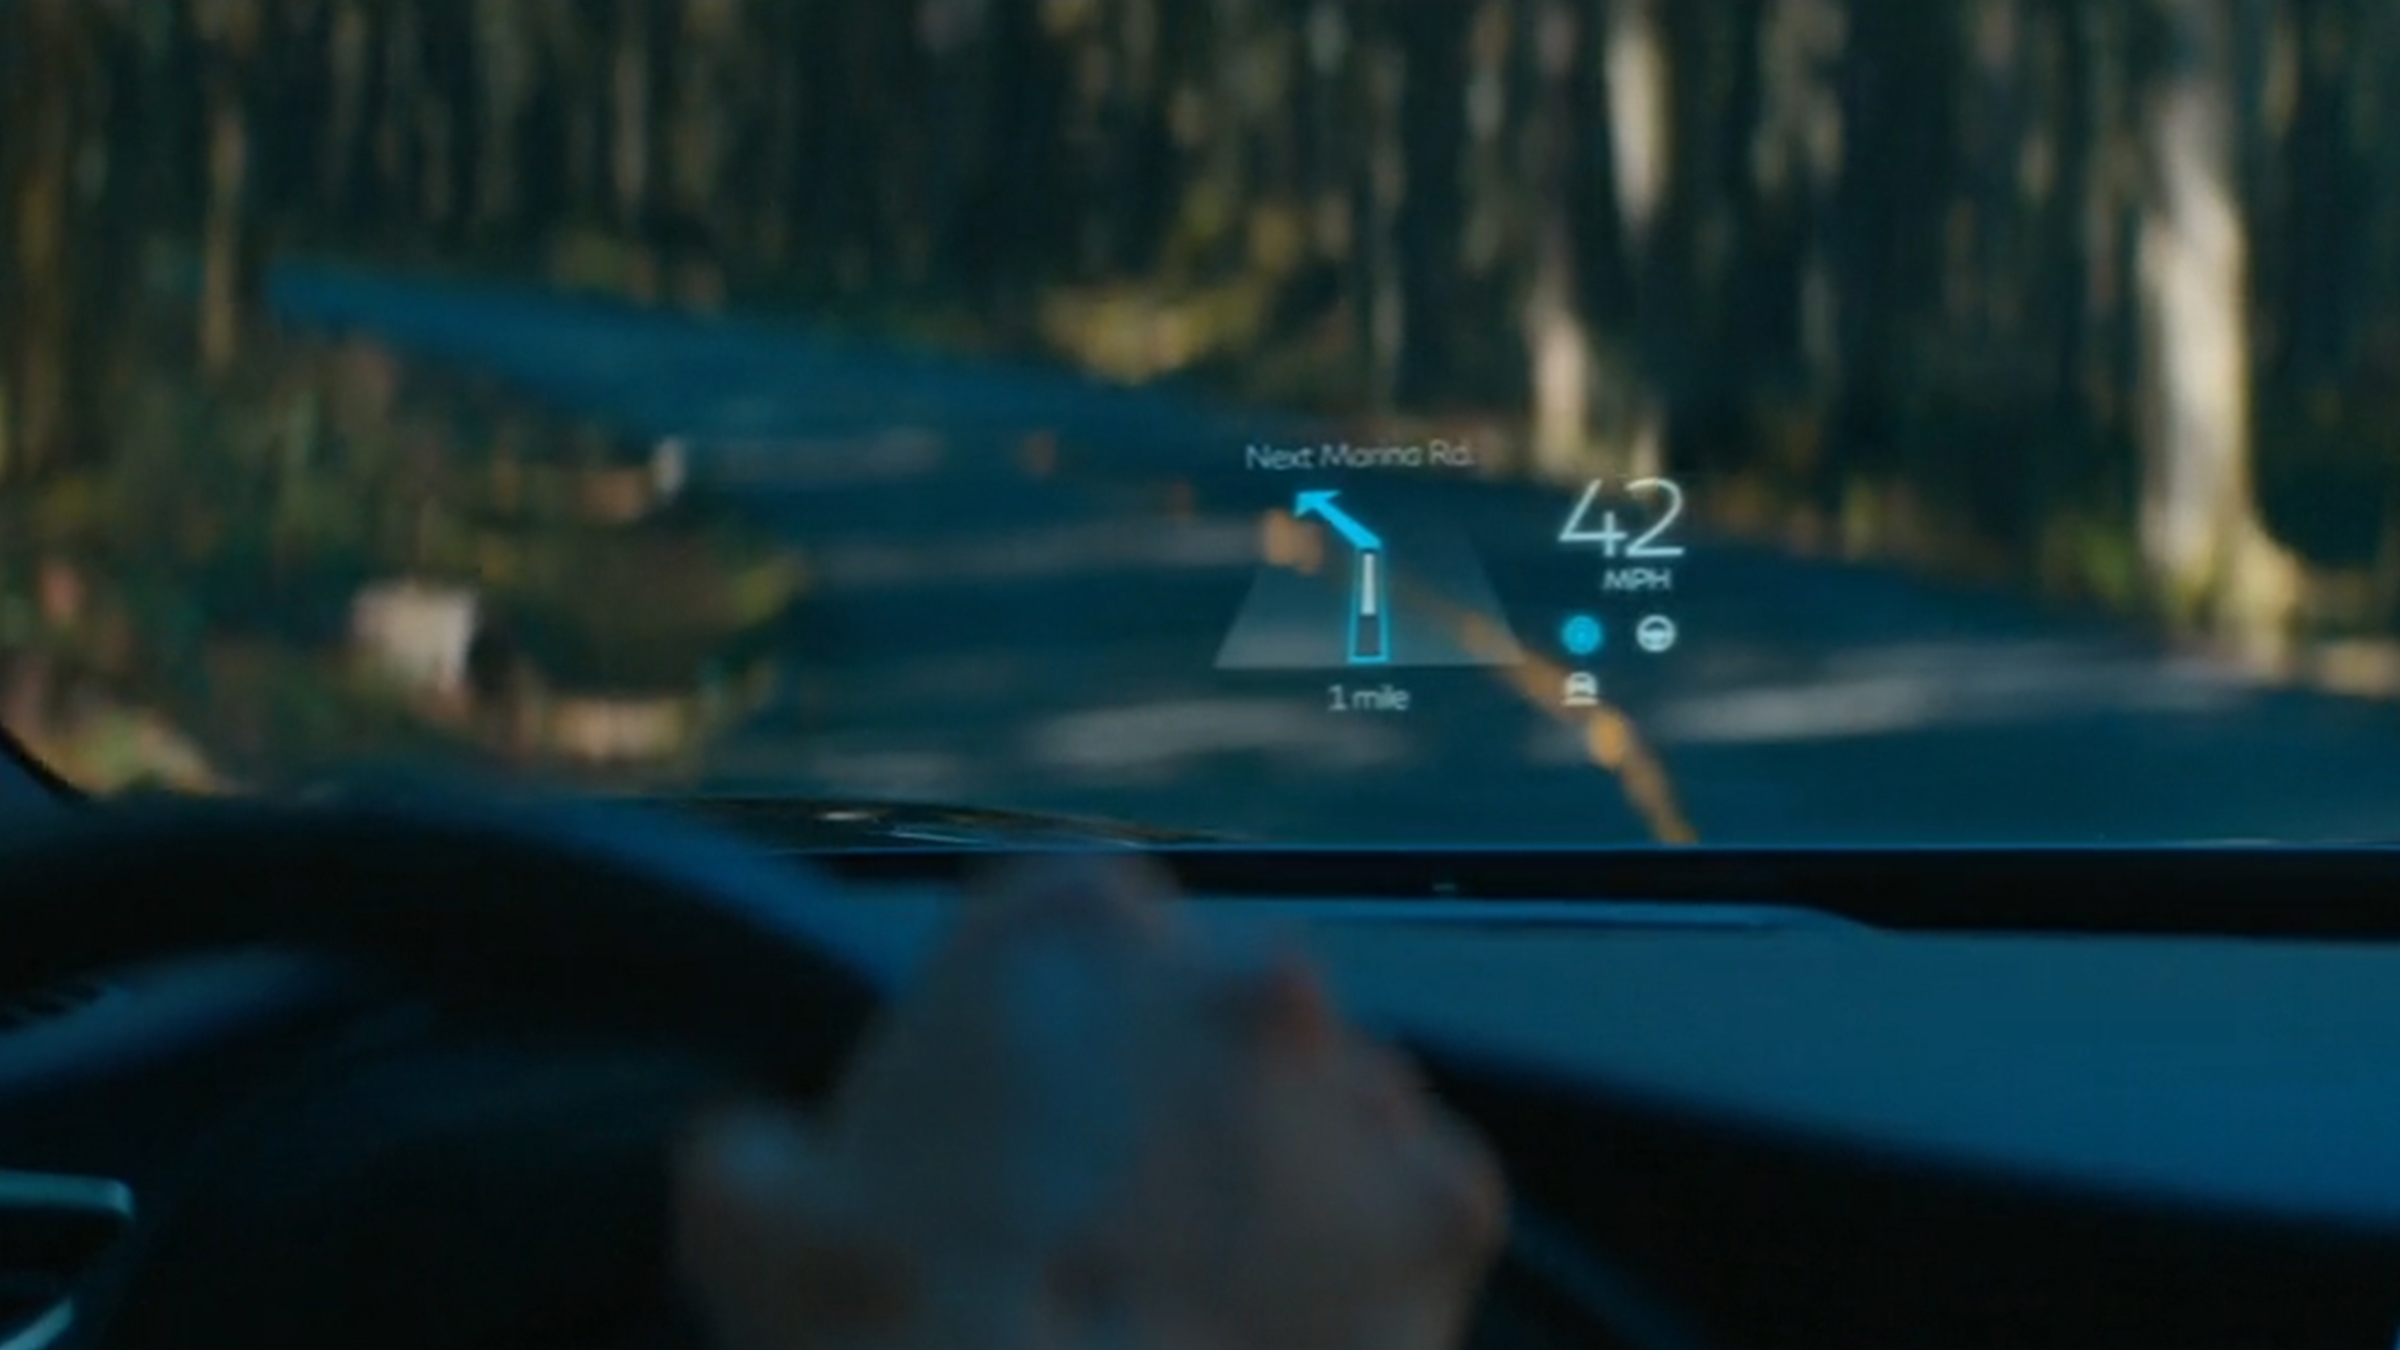 2022 INFINITI QX50 SUV speed monitor reflection.